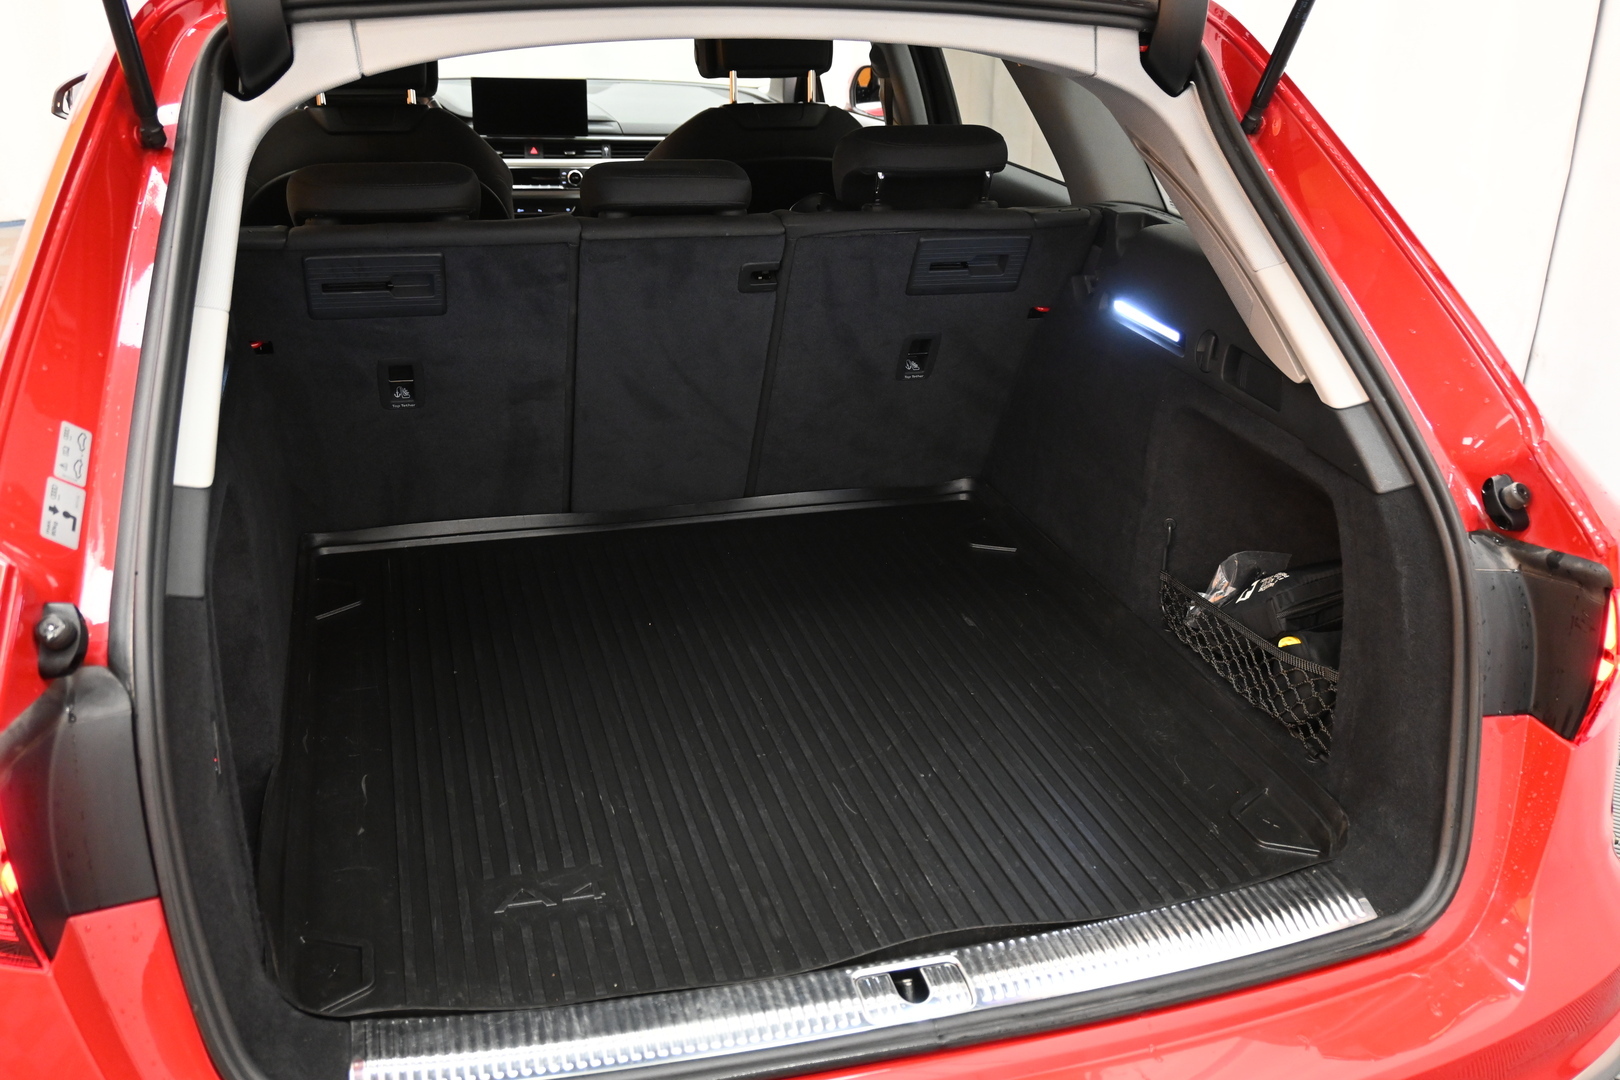 Punainen Farmari, Audi A4 – IOX-368